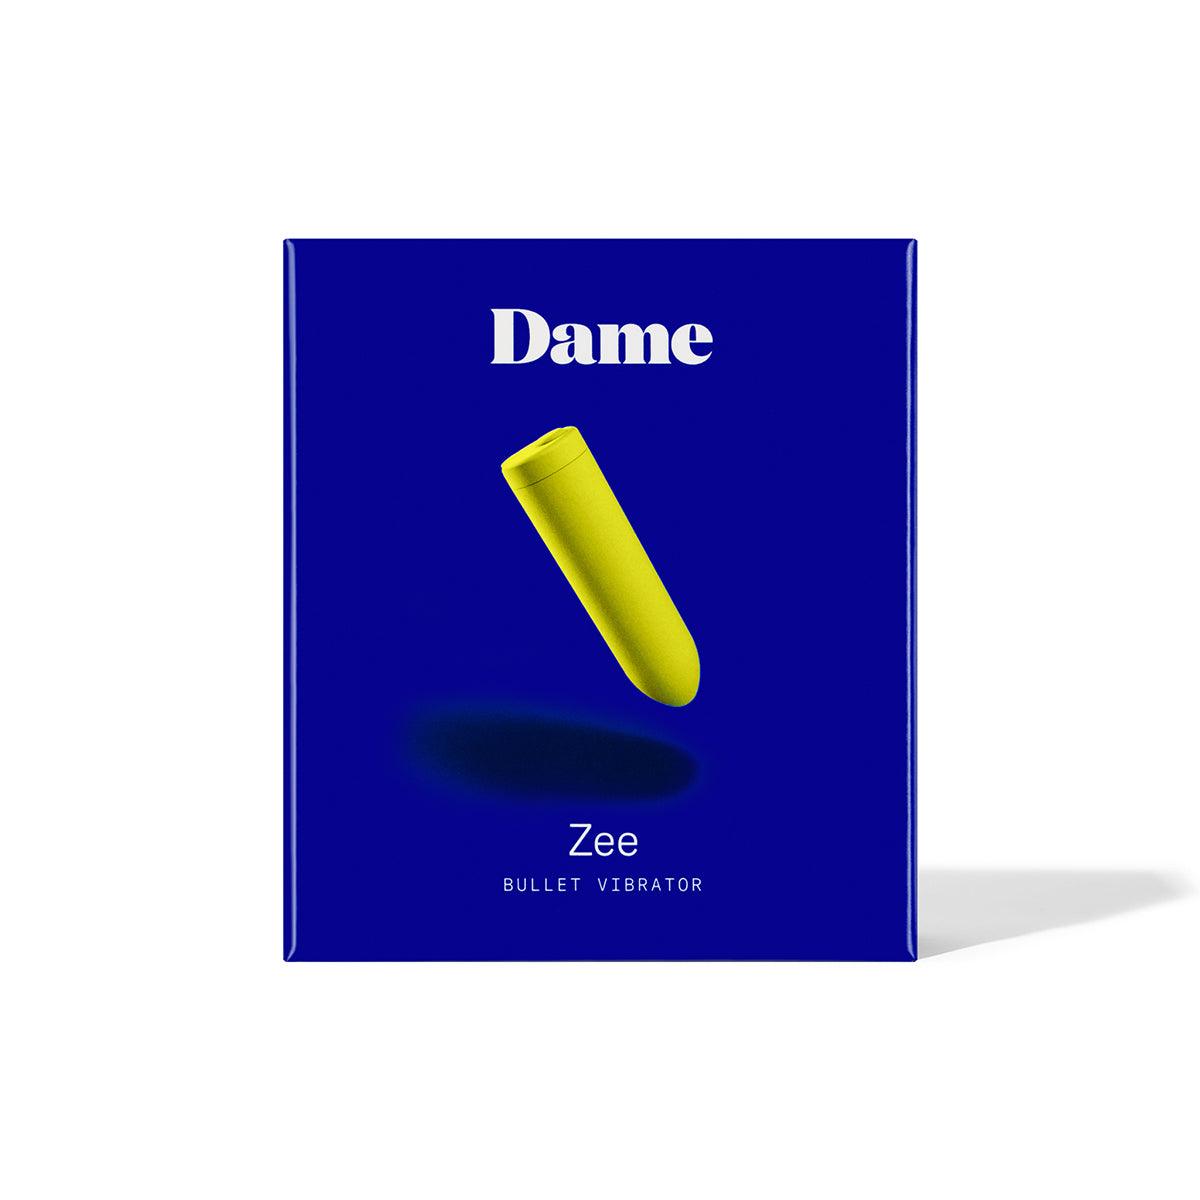 Zee by Dame - Citrus - shop enby